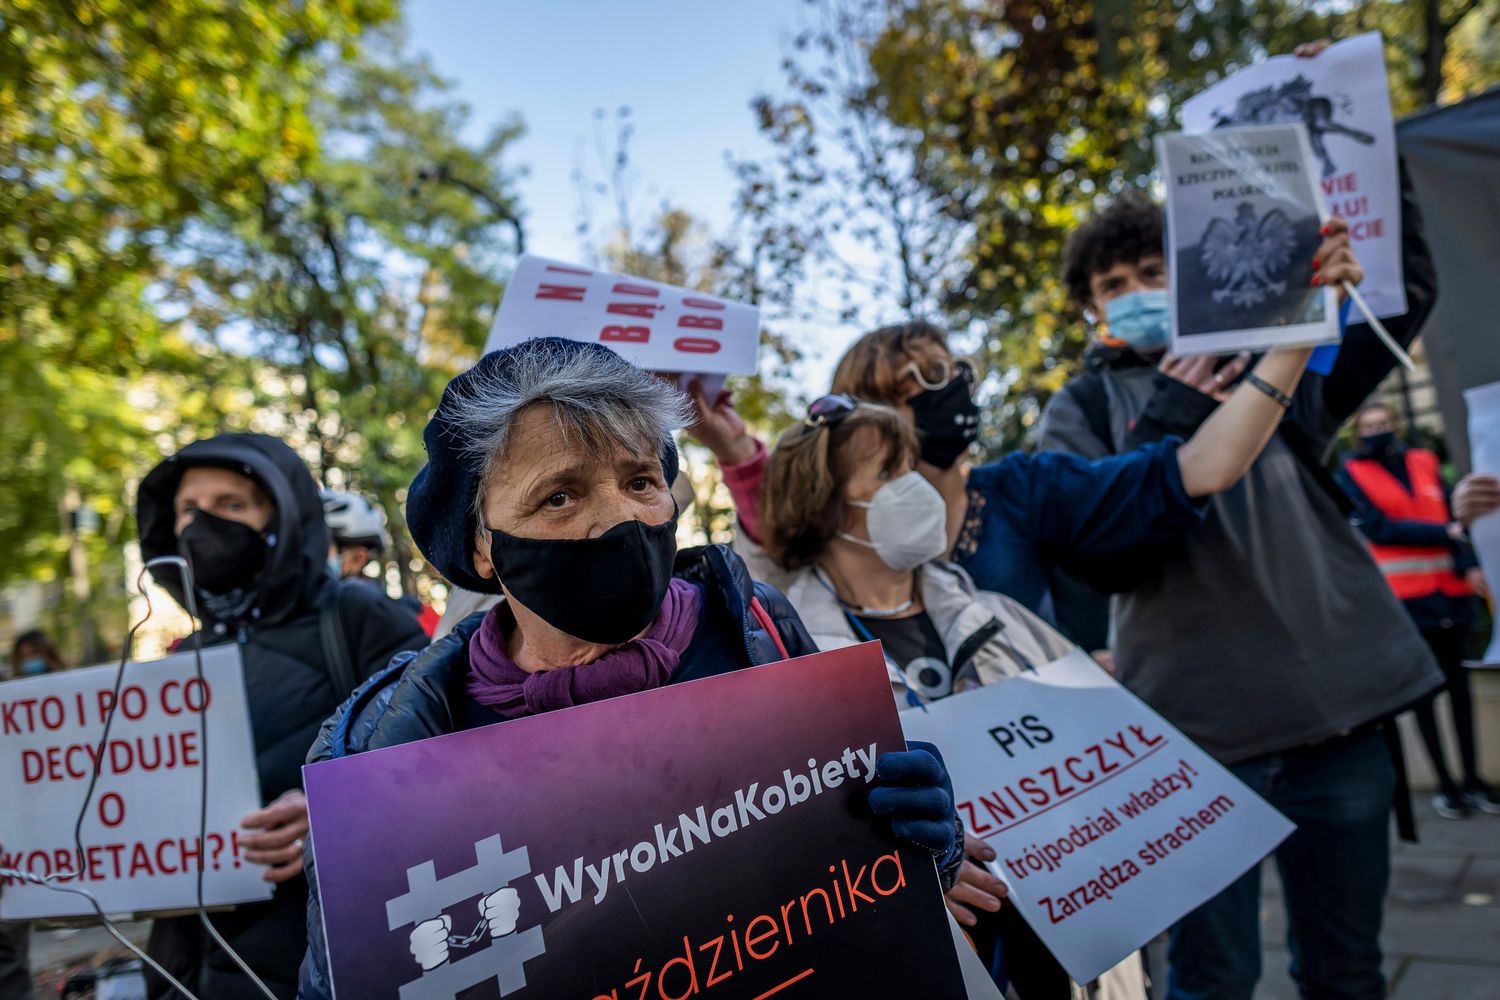 Polonia promulga una prohibición “casi total” del aborto